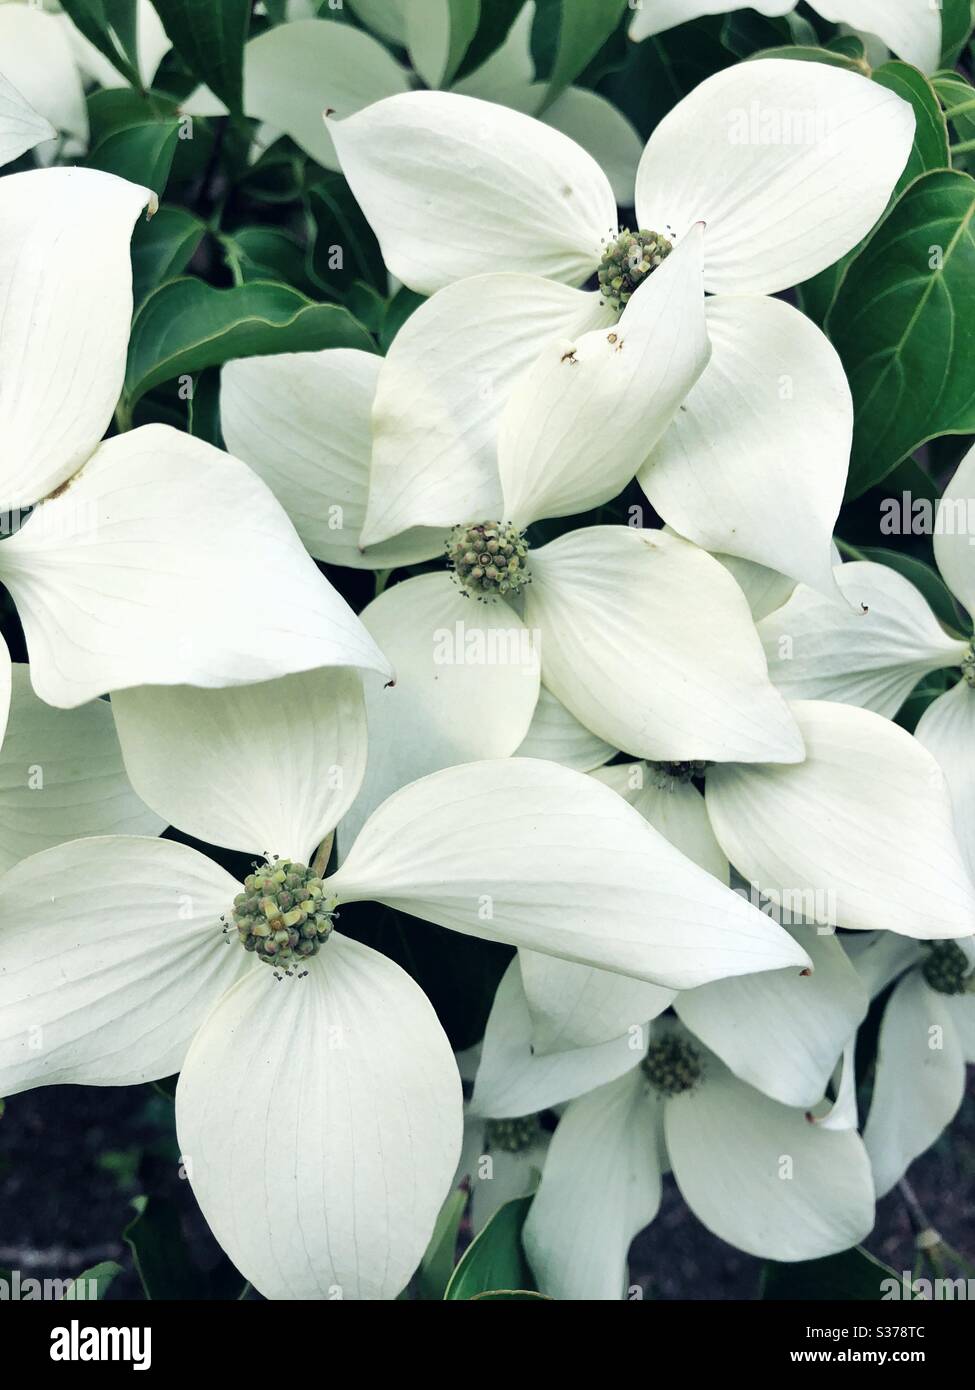 white dogwood tree flowers creating a pattern Stock Photo